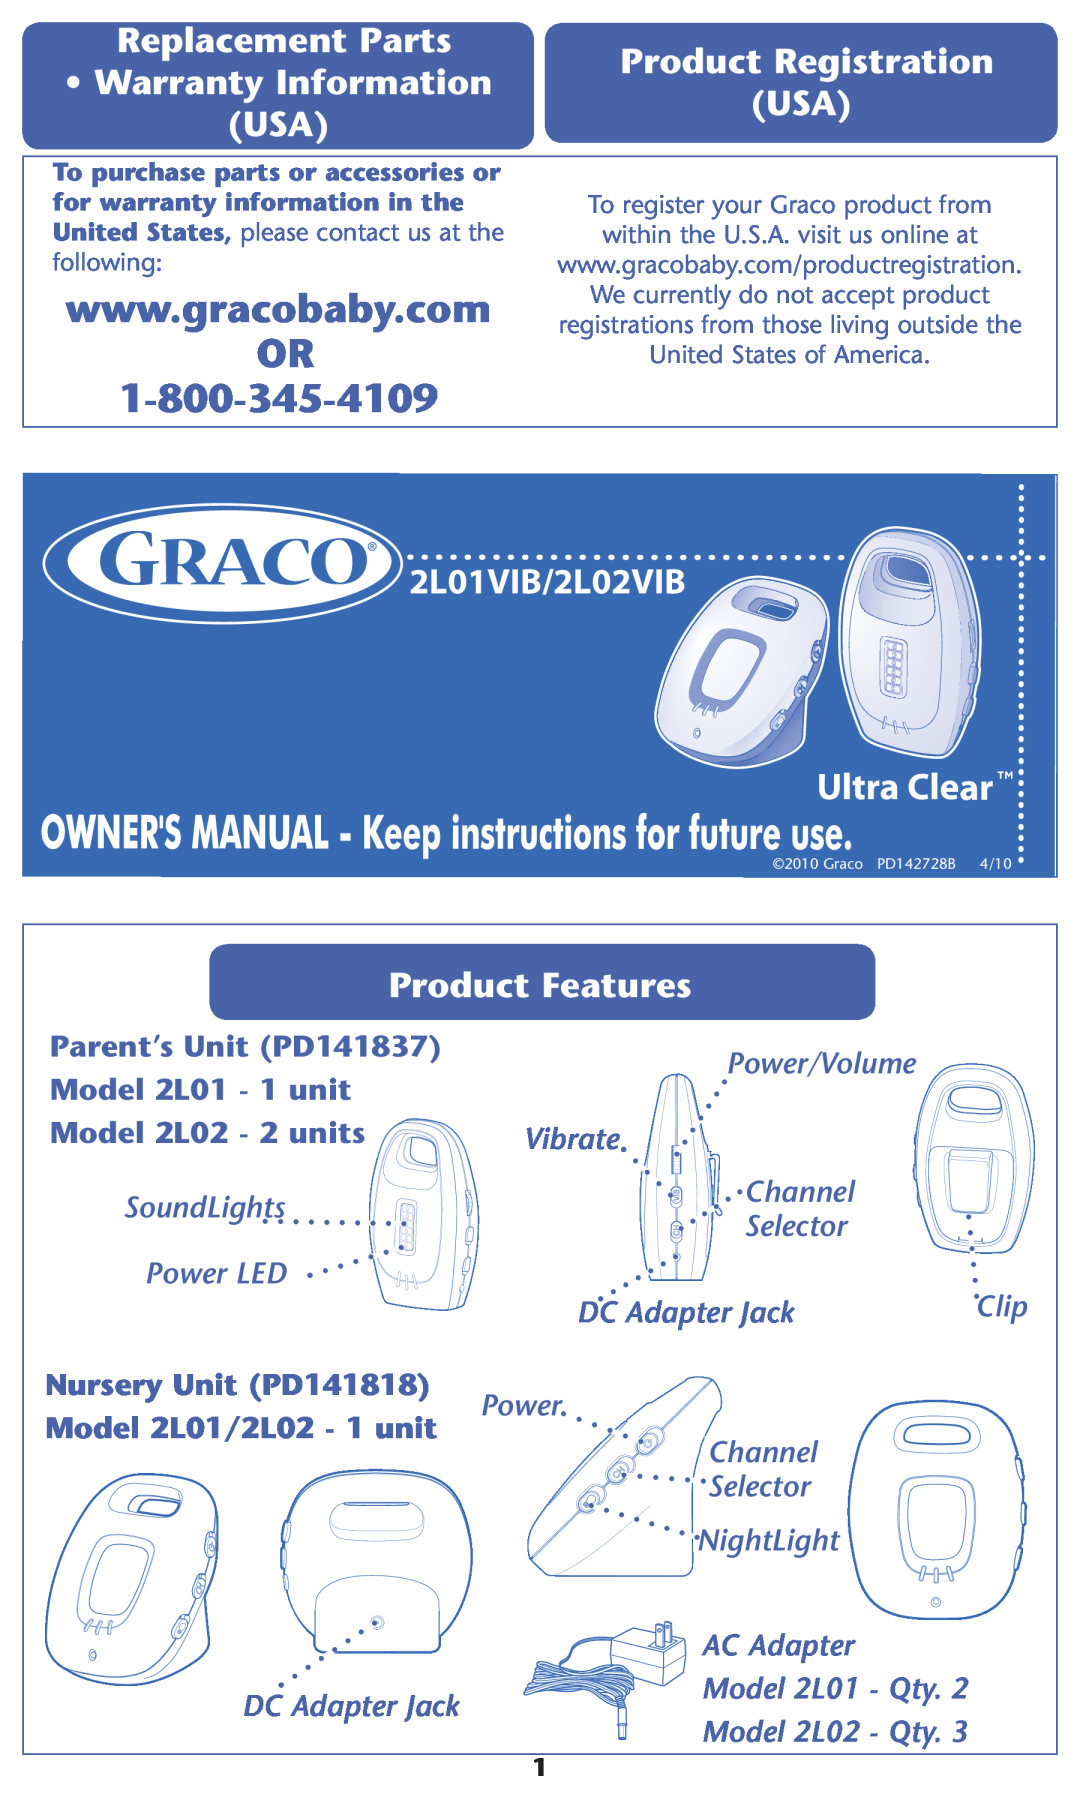 Graco warranty Ultra Clear, Replacement Parts Product Registration Warranty Information, 2L01VIB/2L02VIB 